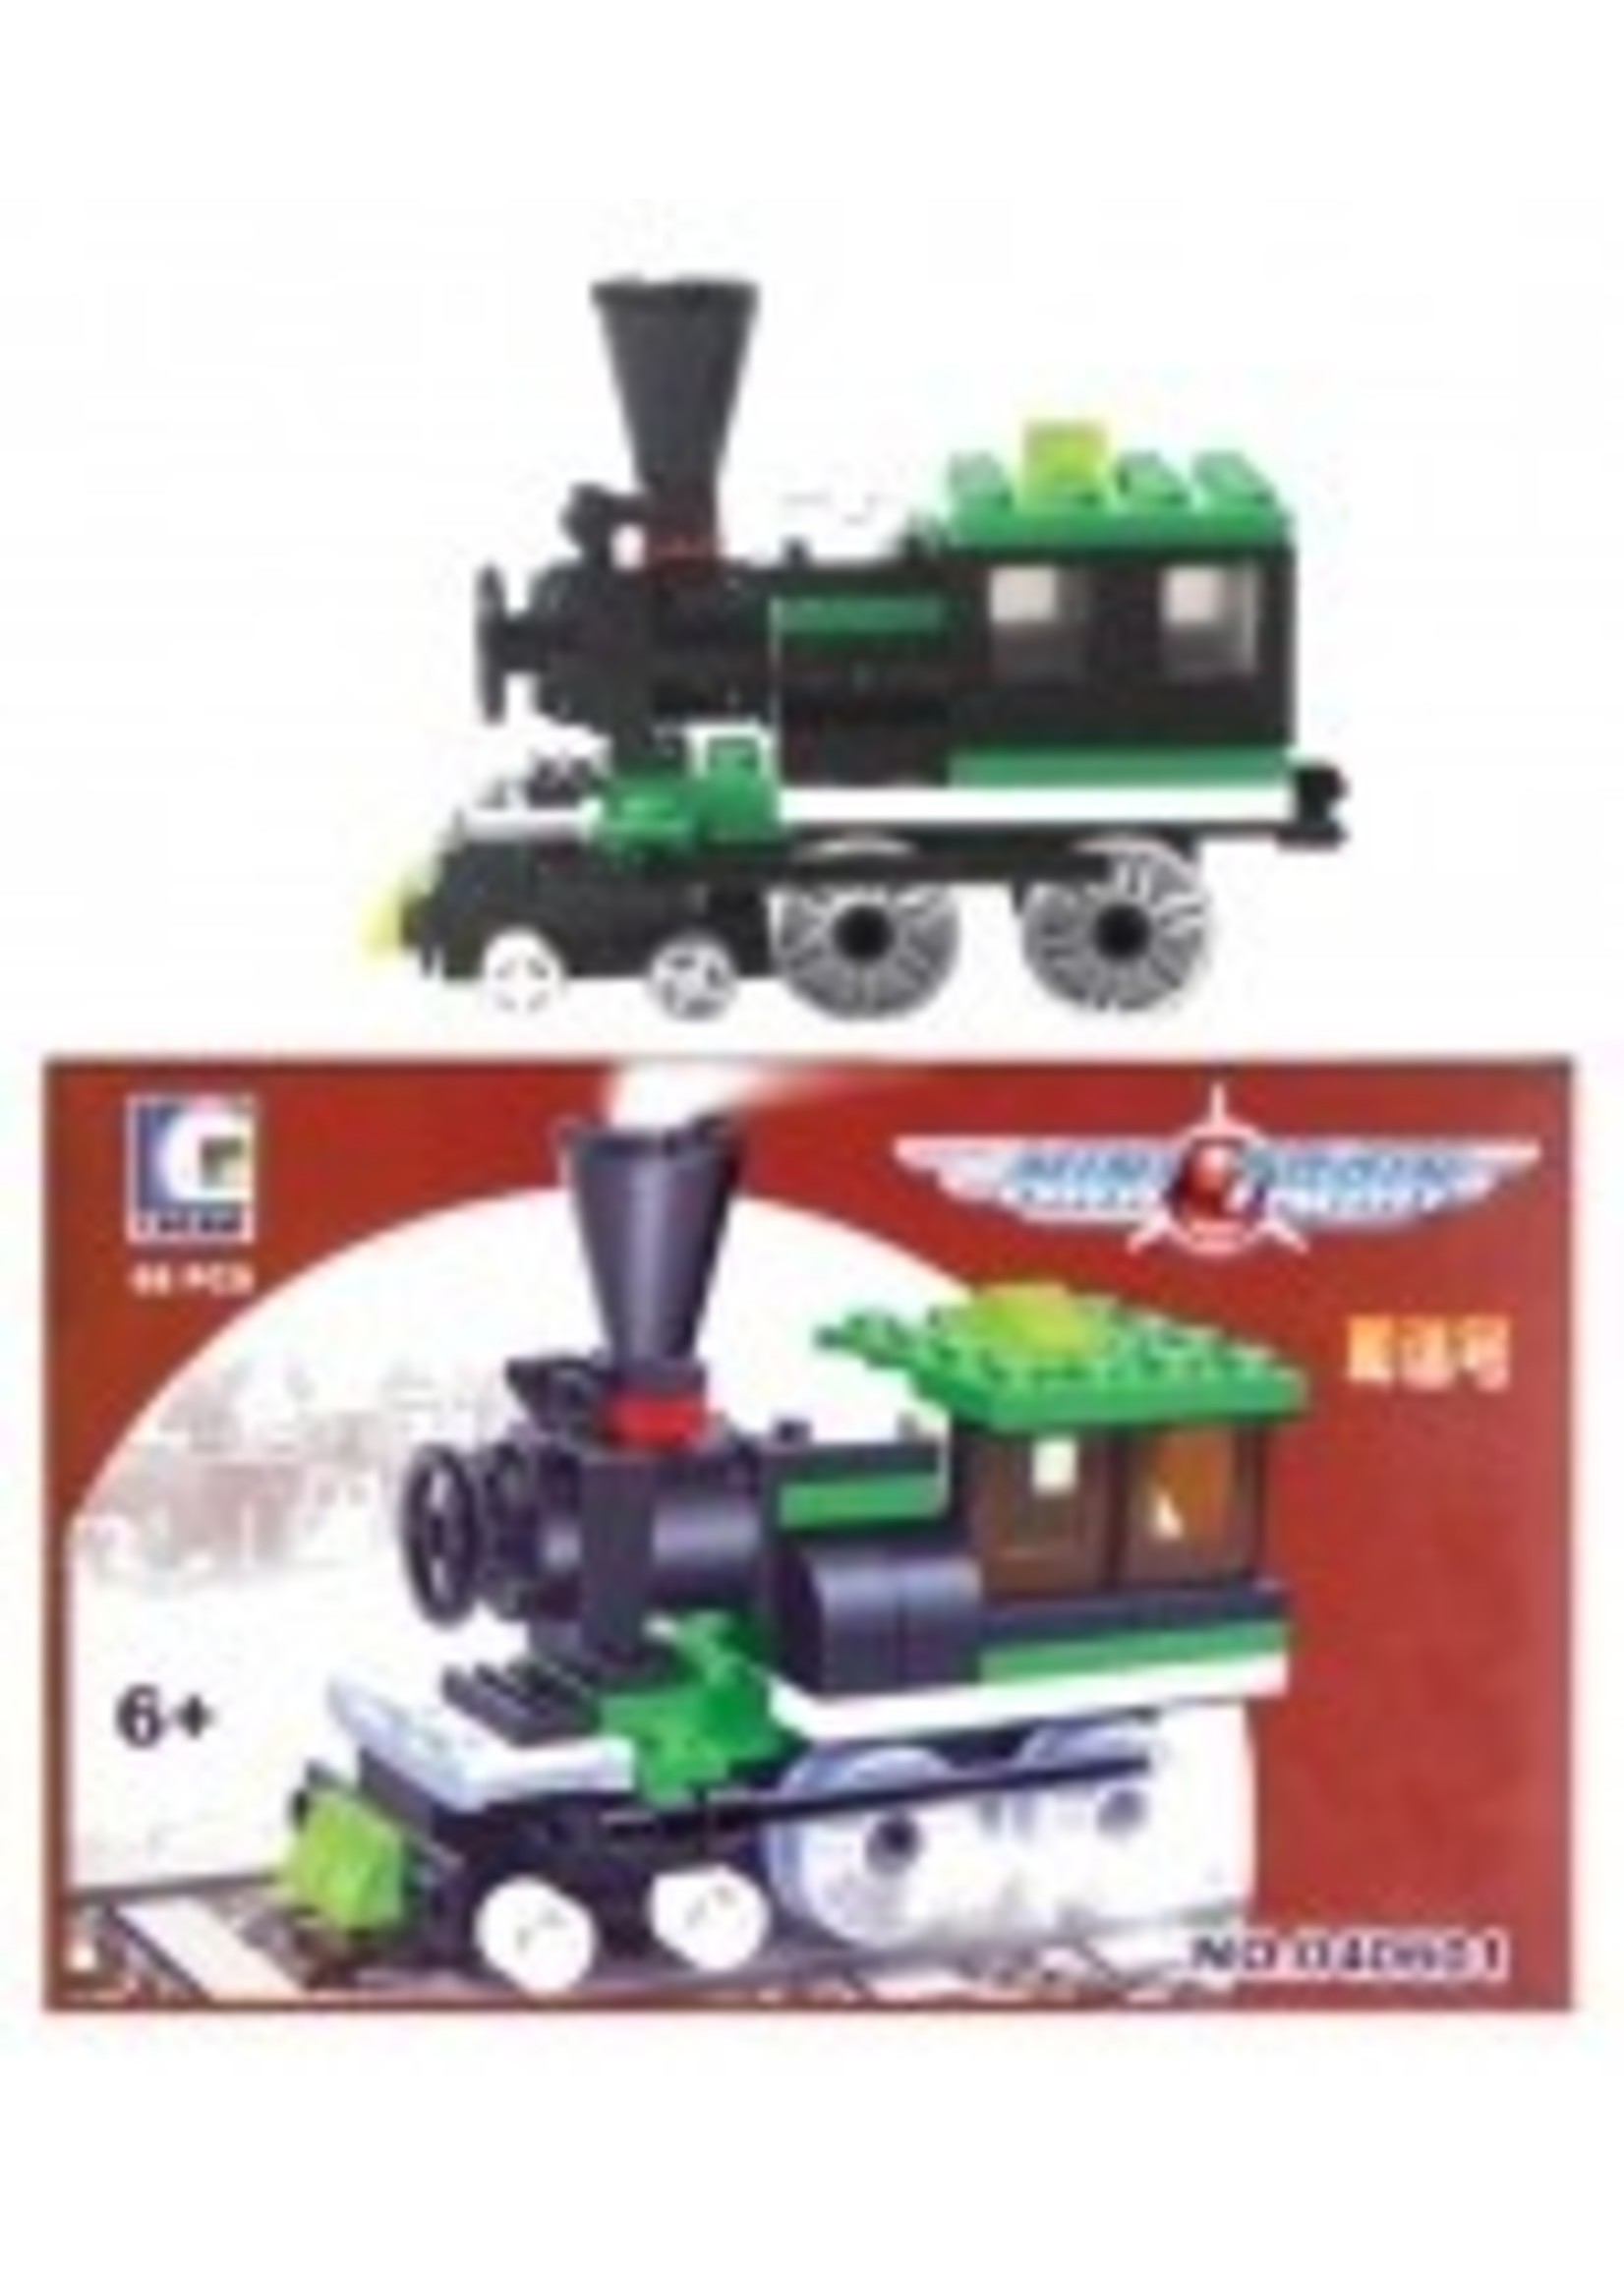 Charles Products 68 pc Train Block Set (lego)